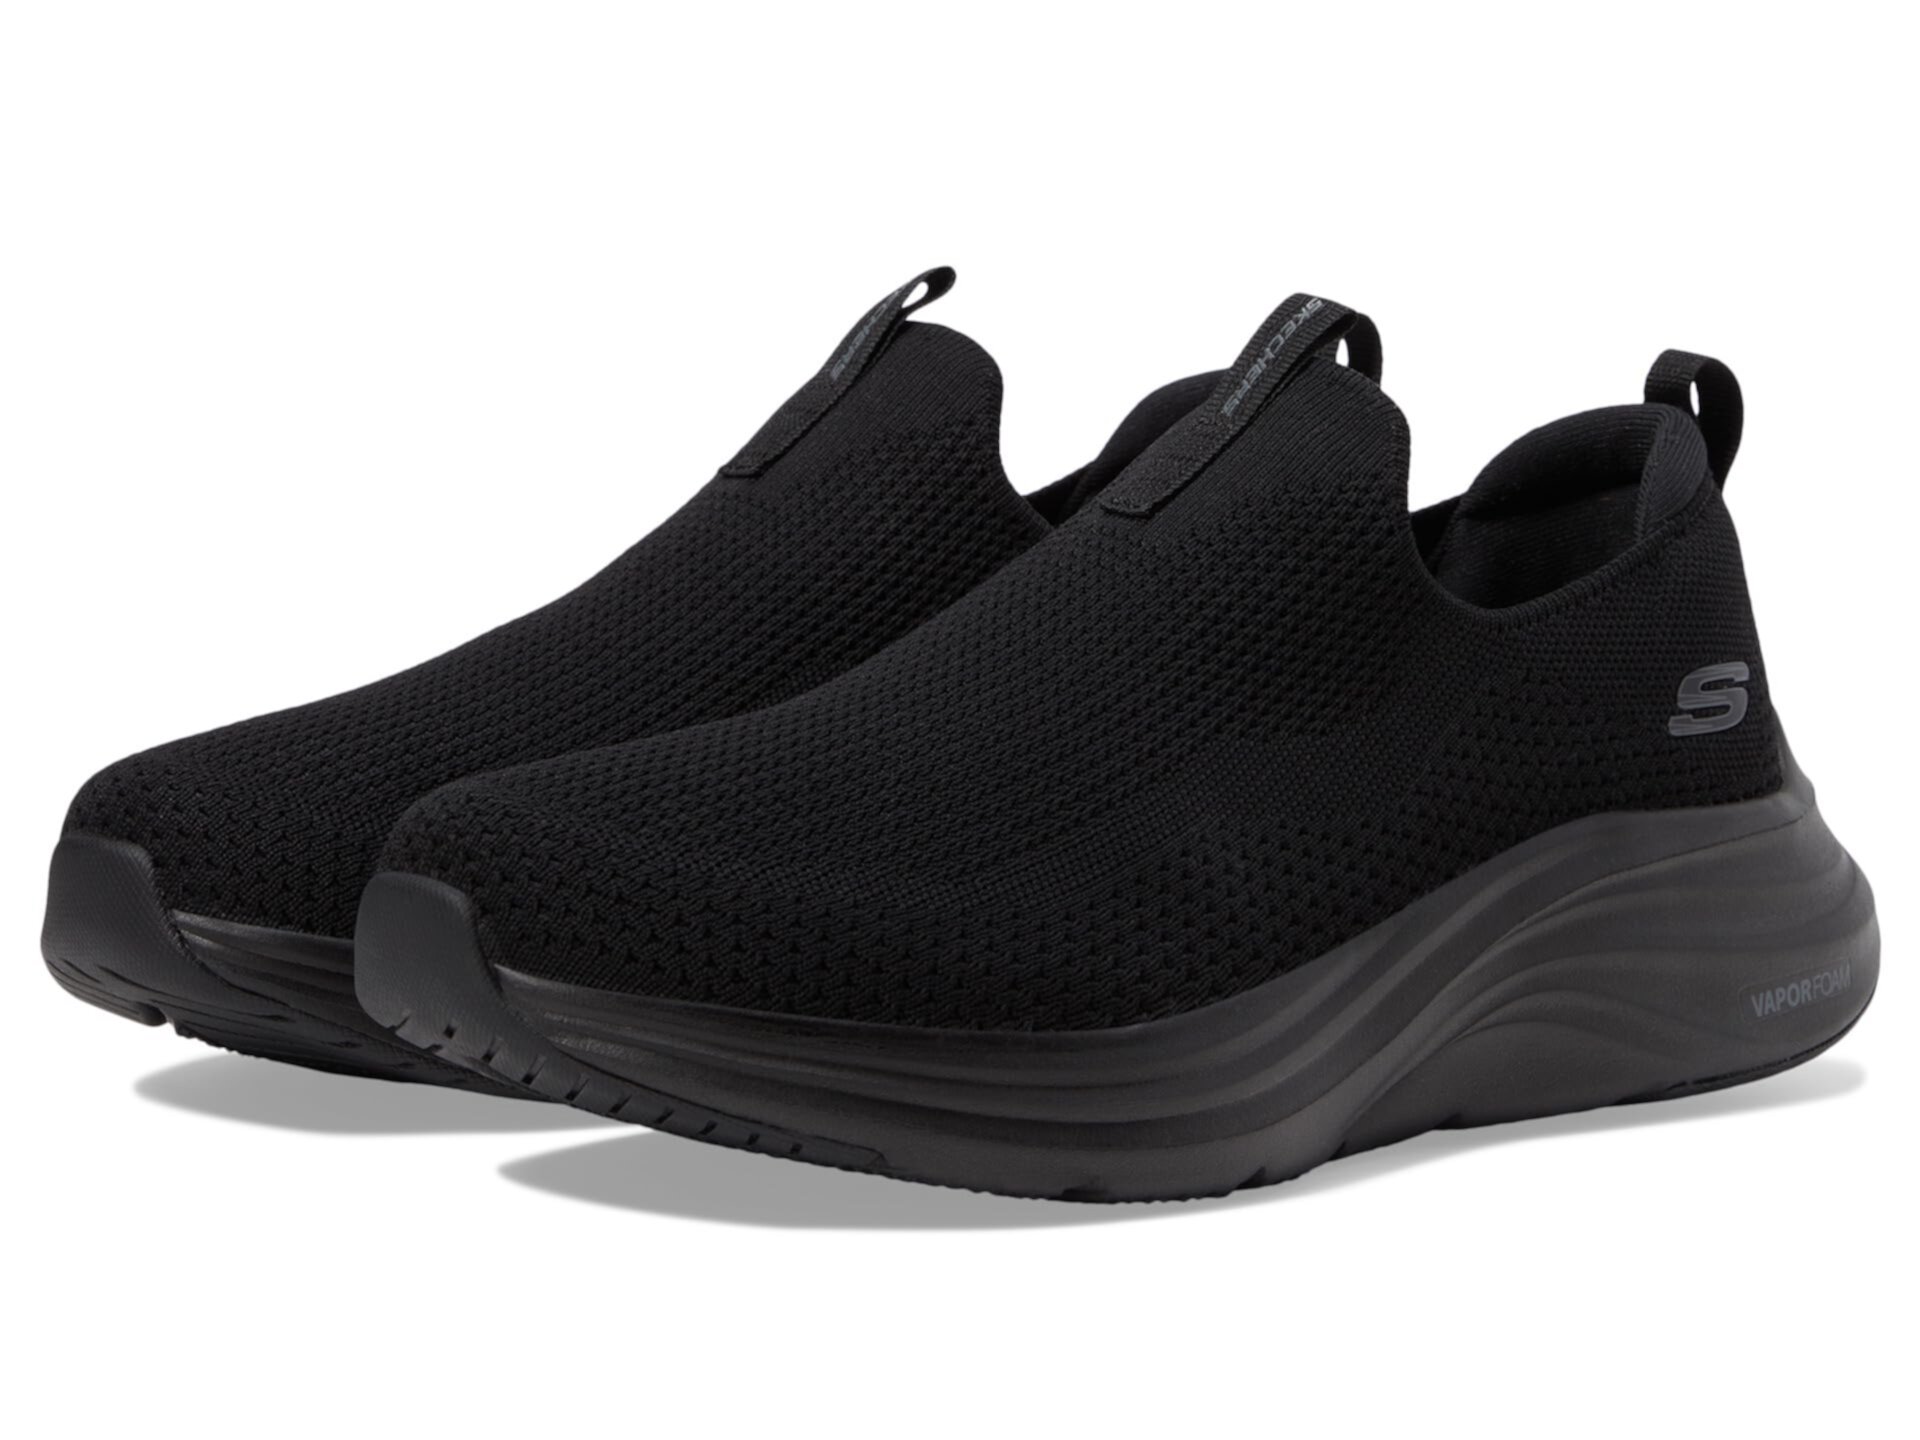  Кроссовки SKECHERS Vapor Foam Covert для мужчин категории Lifestyle Sneakers SKECHERS